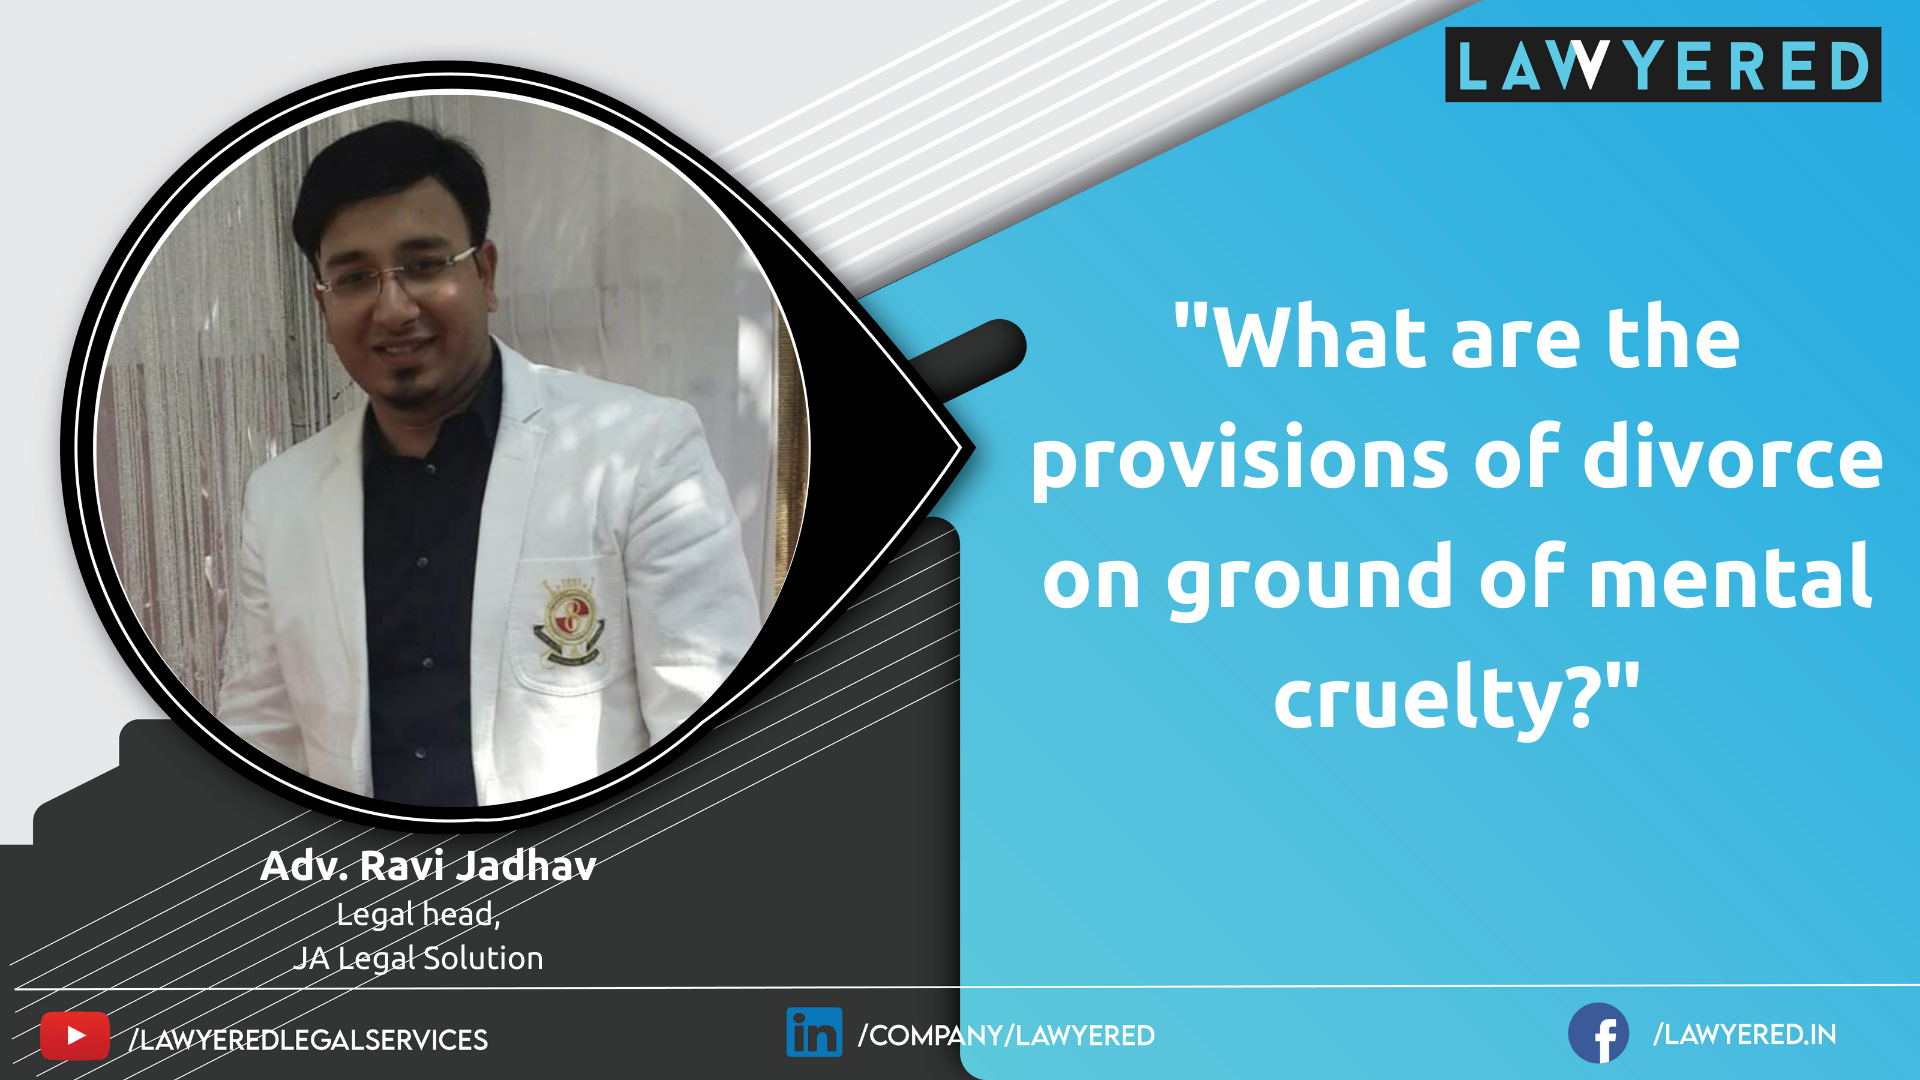 #AMALawyered on Provisions of divorce on ground of mental cruelty with Adv. Ravi Jadhav Jadhav